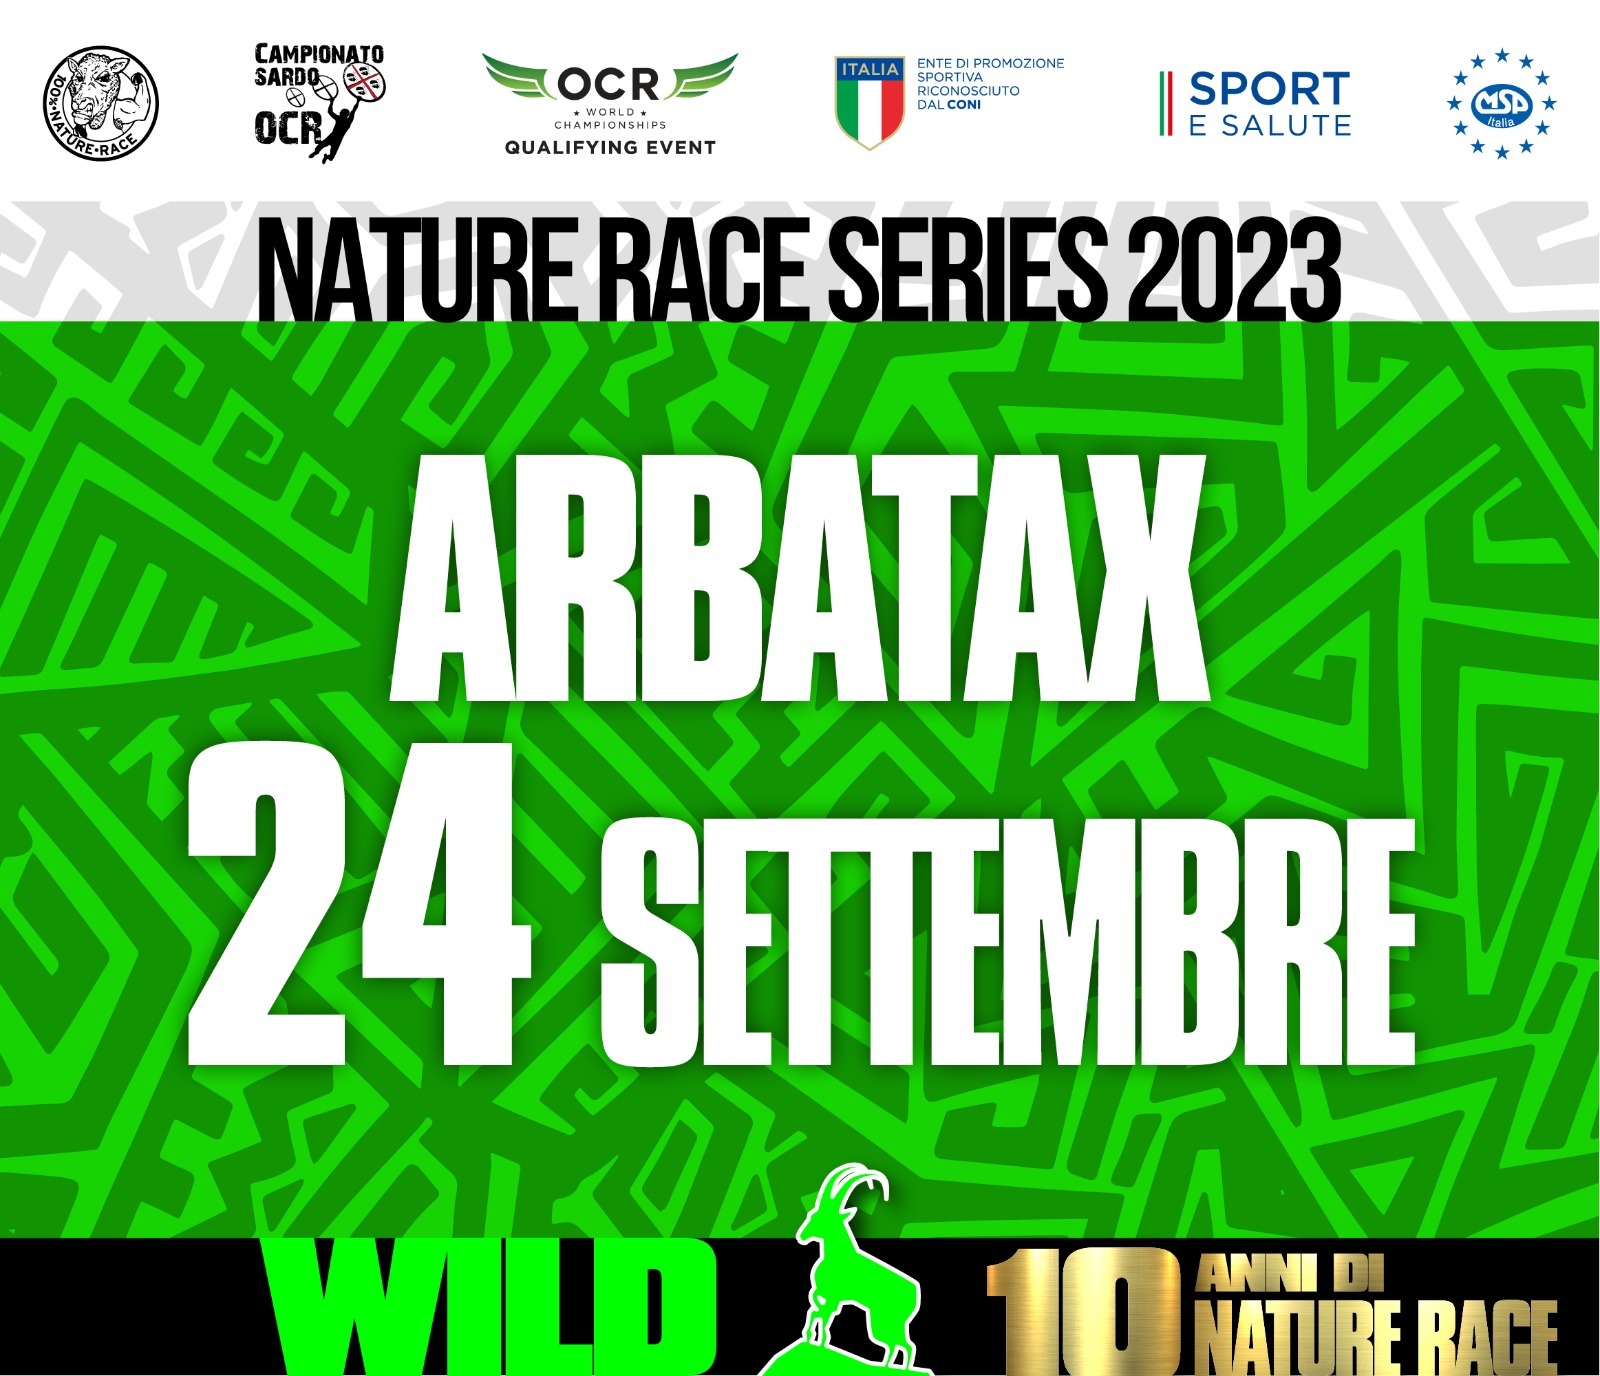 ARBATAX PARK NATURE RACE - WILD  - Iscriviti